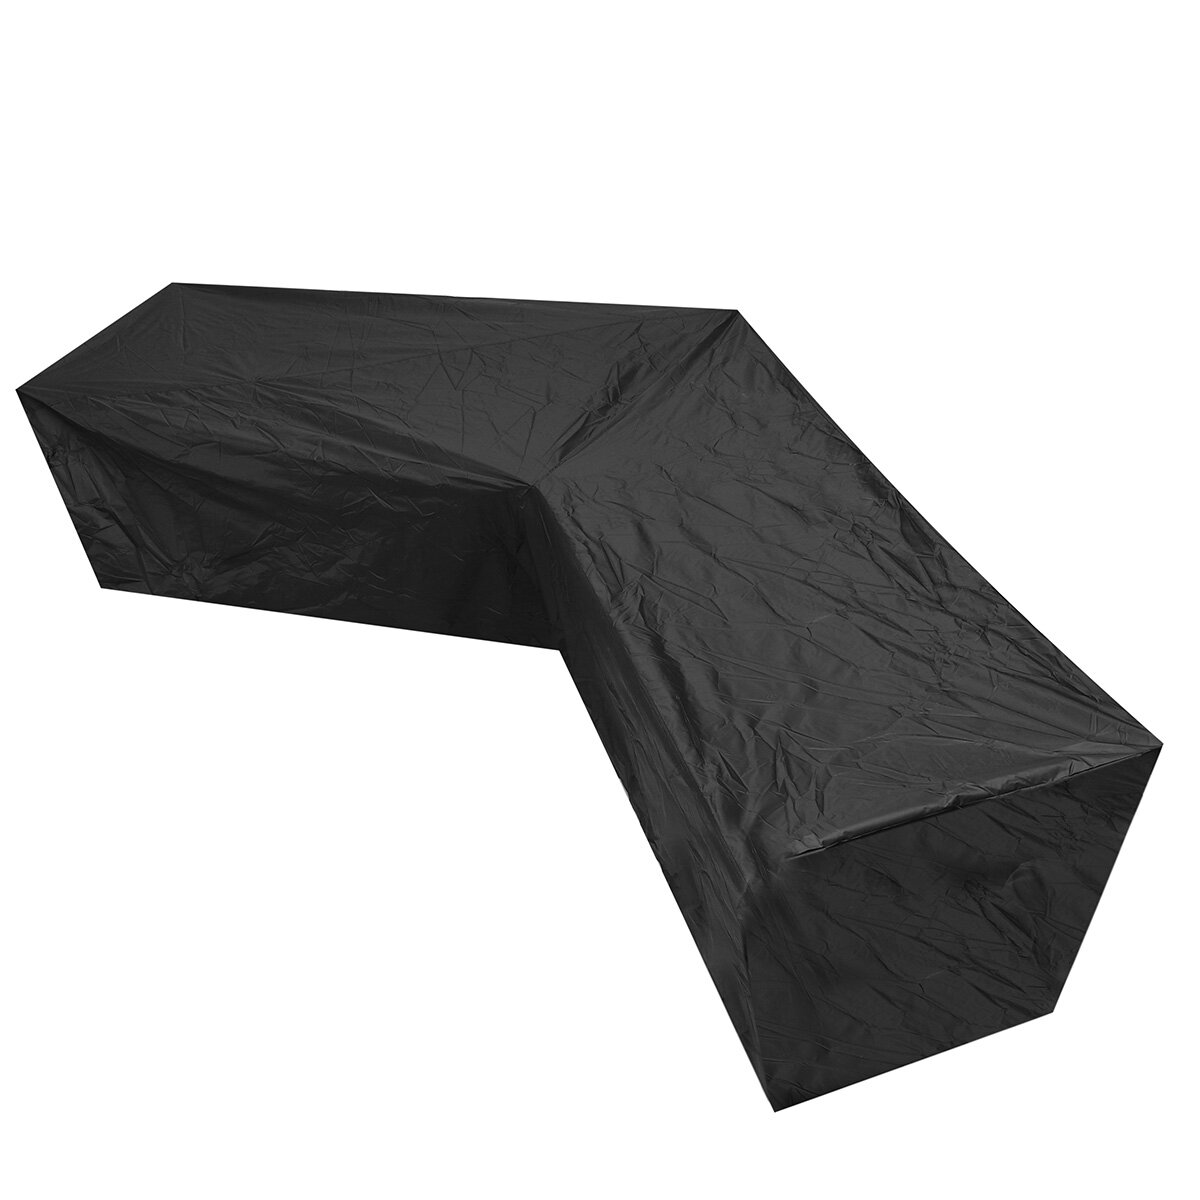 Meubels Sofa Cover Waterproof V Shape Outdoor Garden Chair Protector